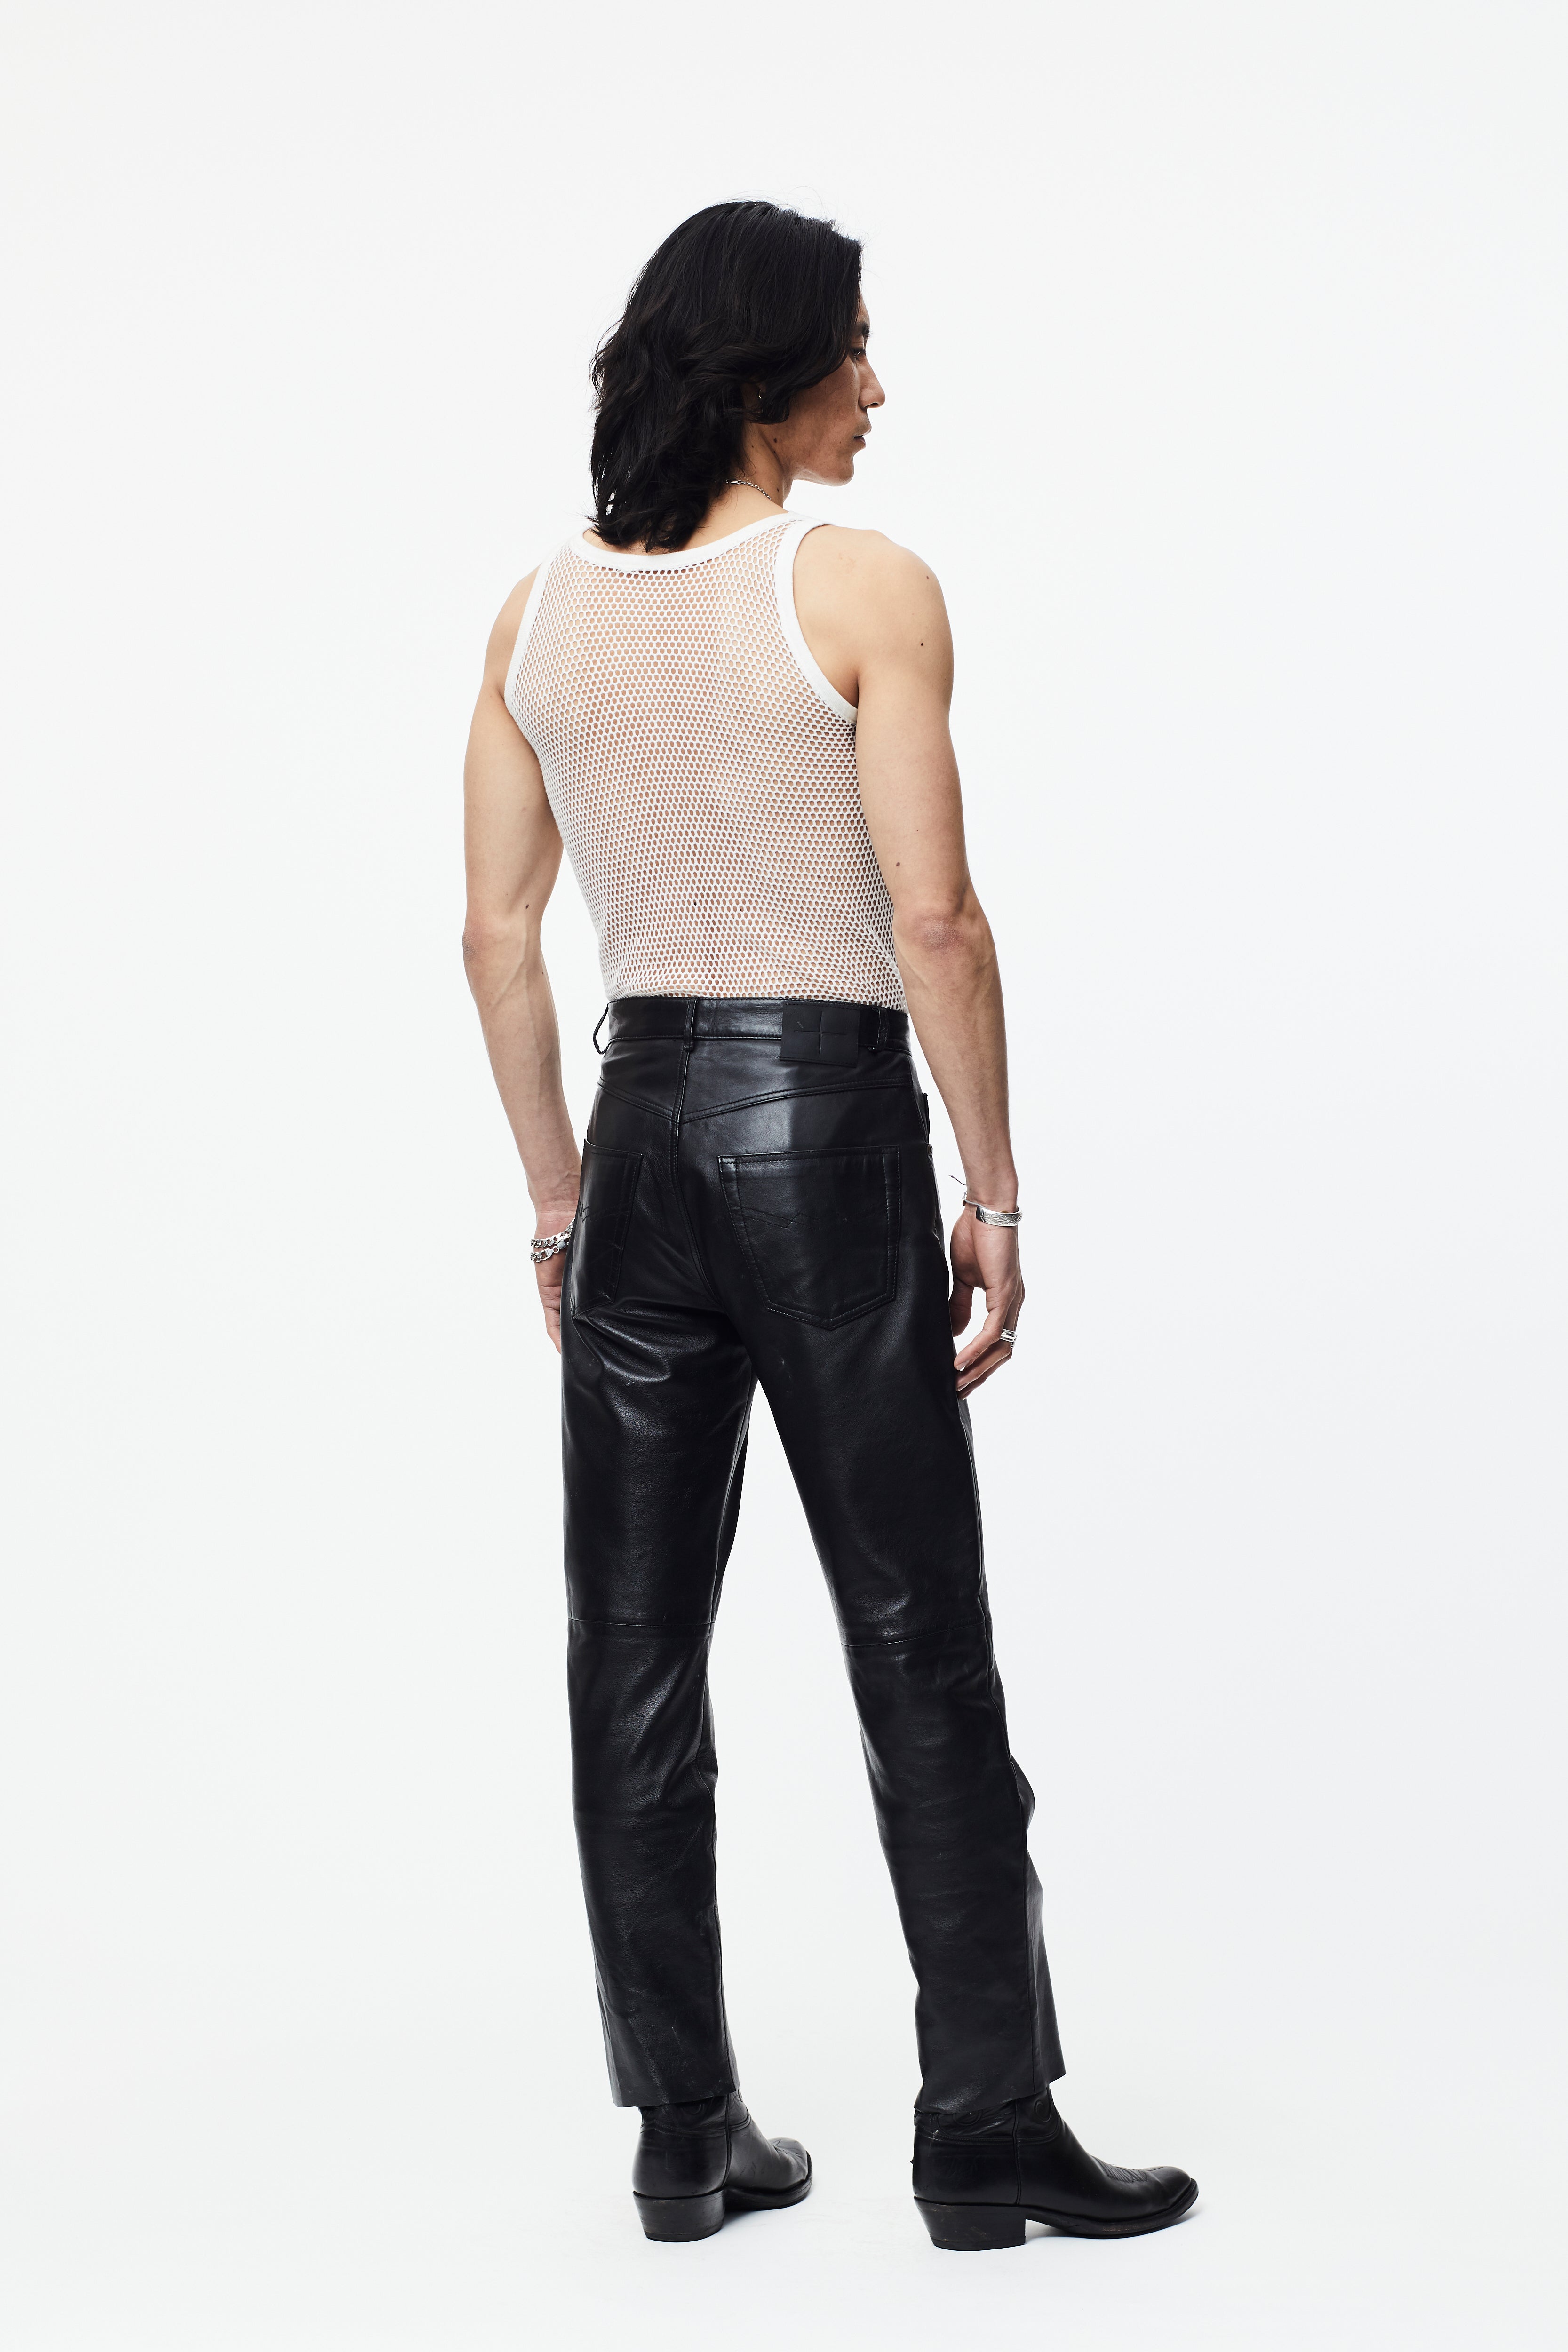 leather jeans/ mickkeus